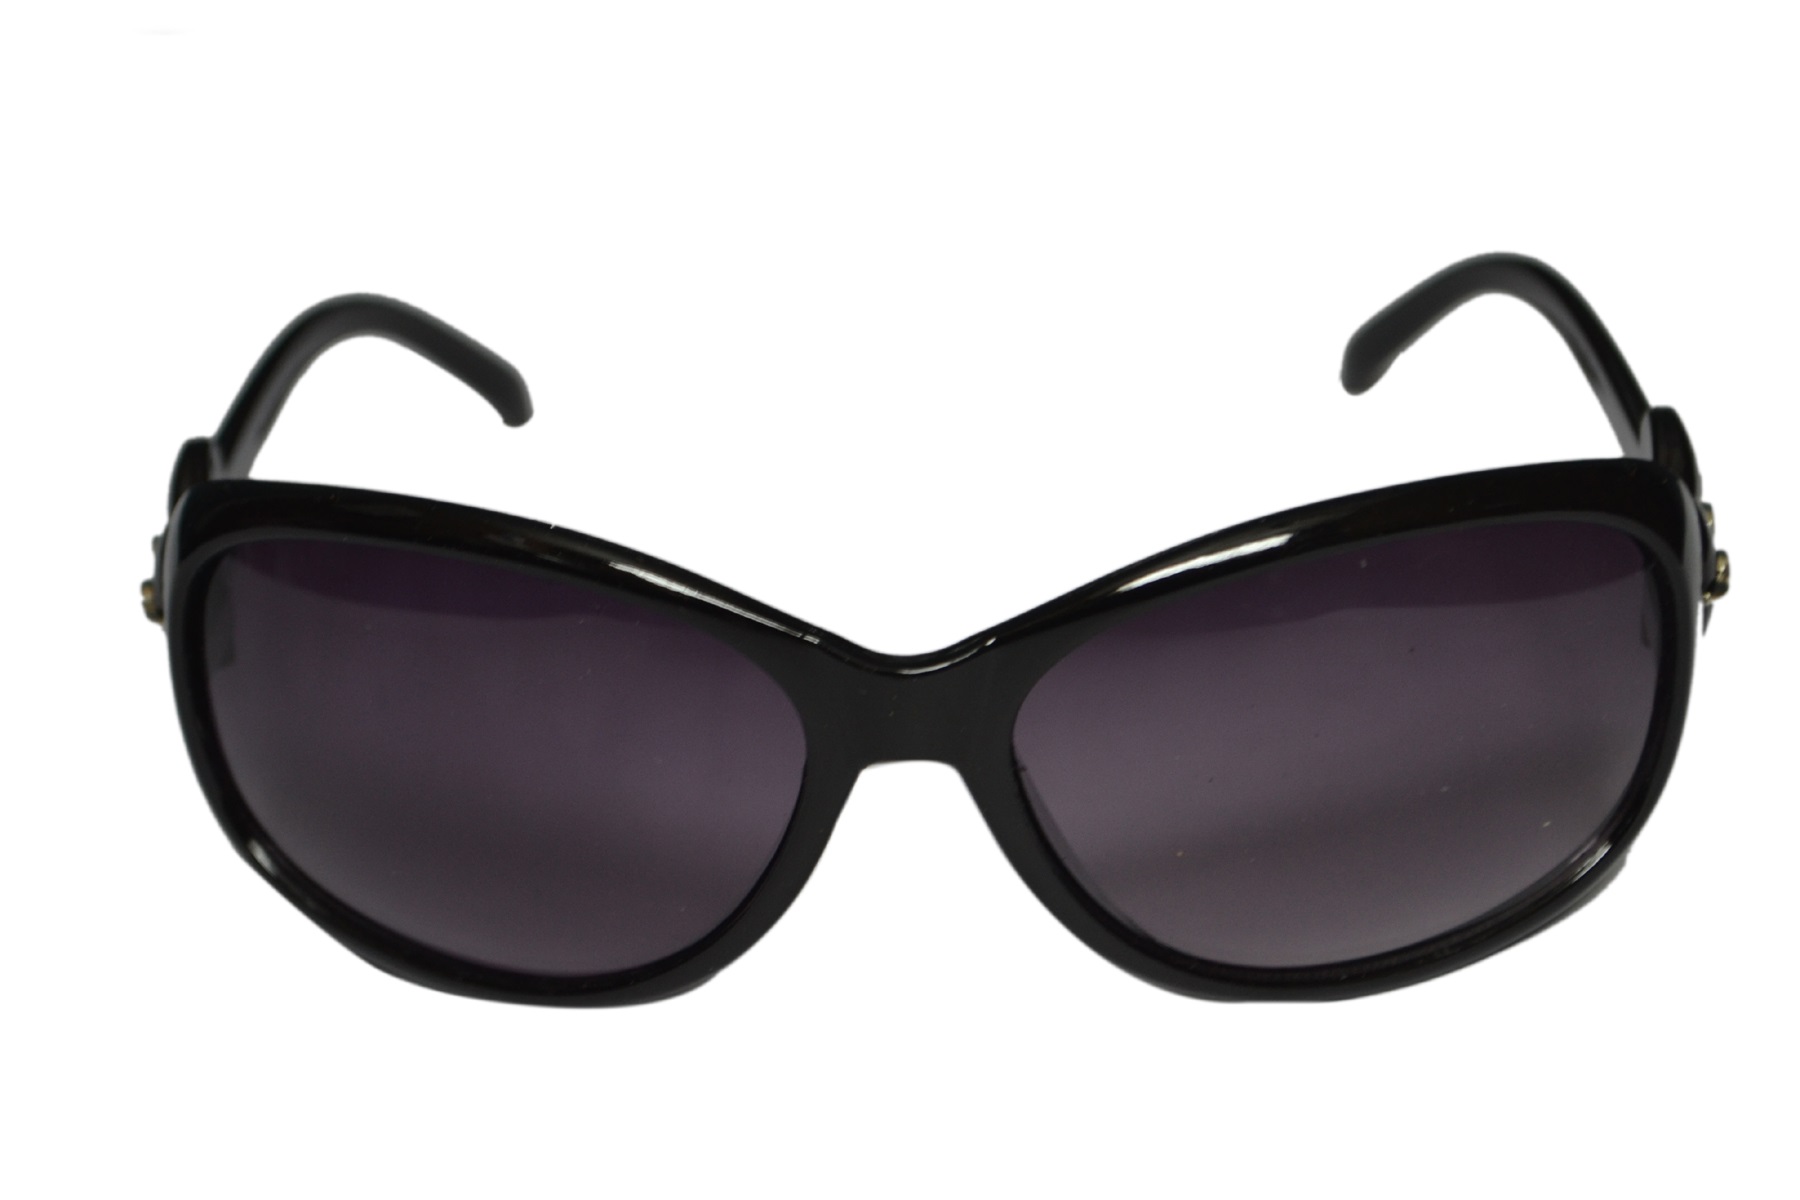 Buy Women Black Oval Shape Sunglasses Online @ ₹209 from ShopClues